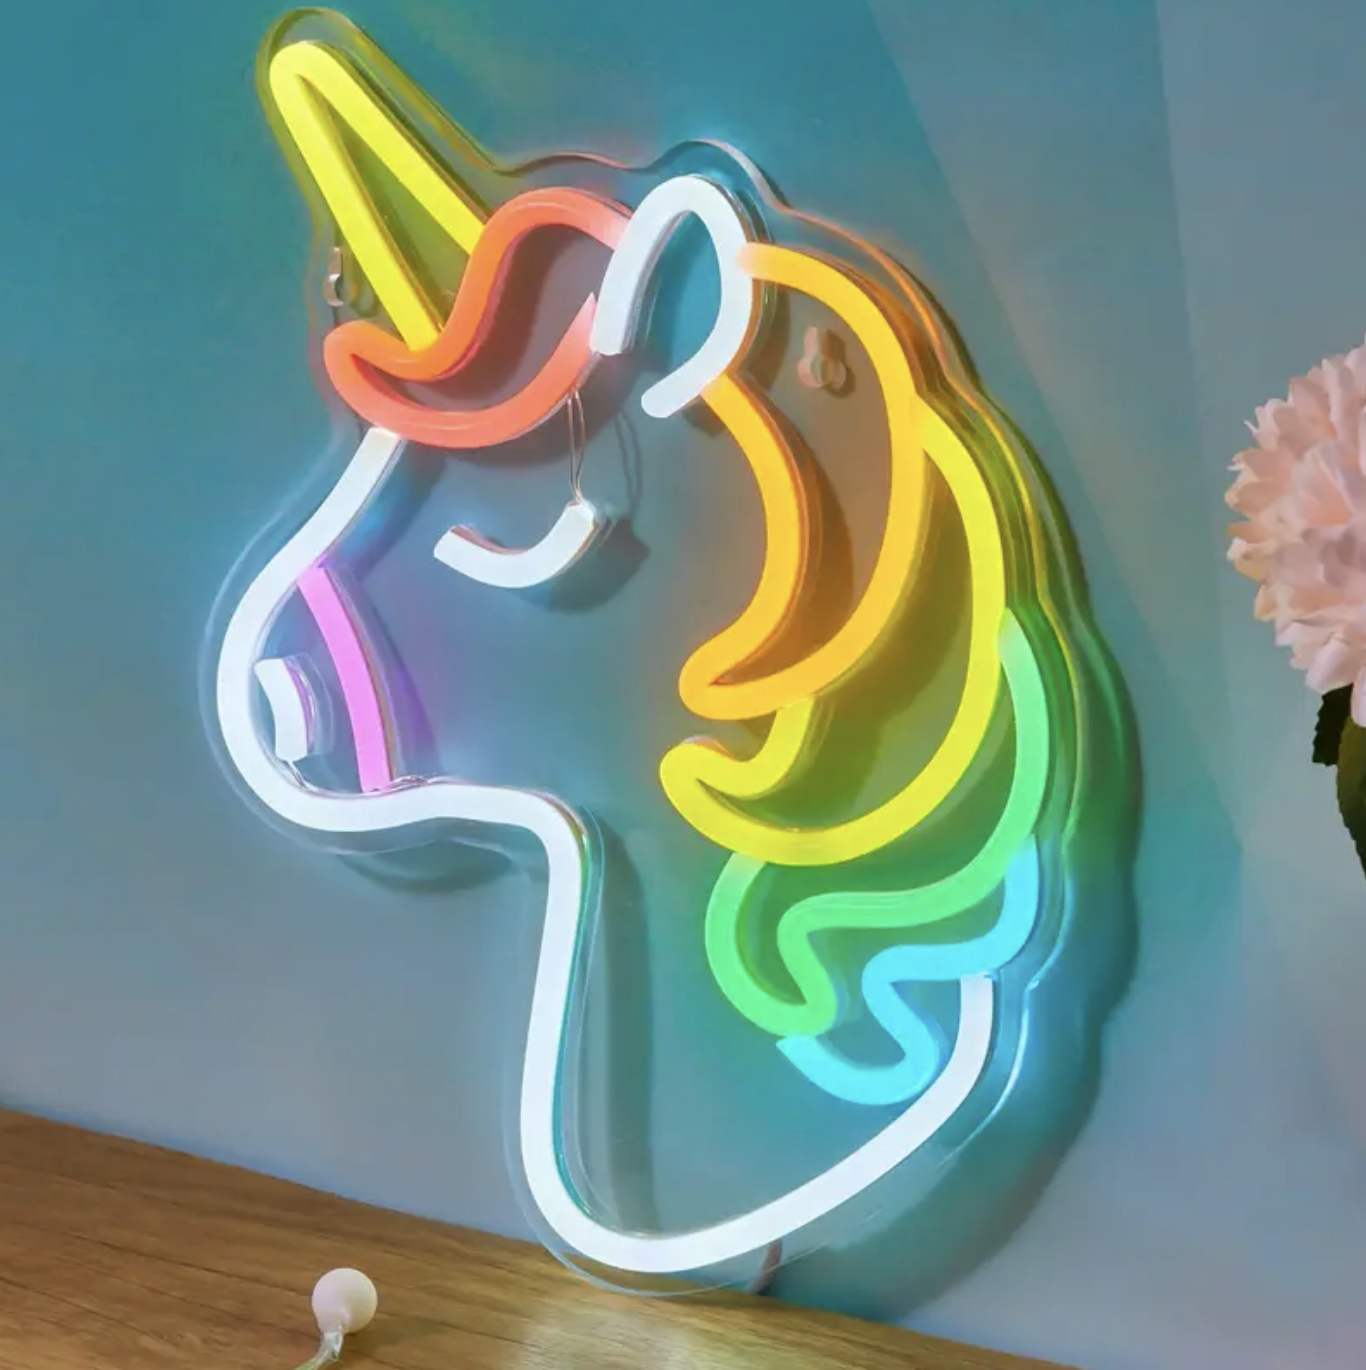 Unicorn Neon LED Light